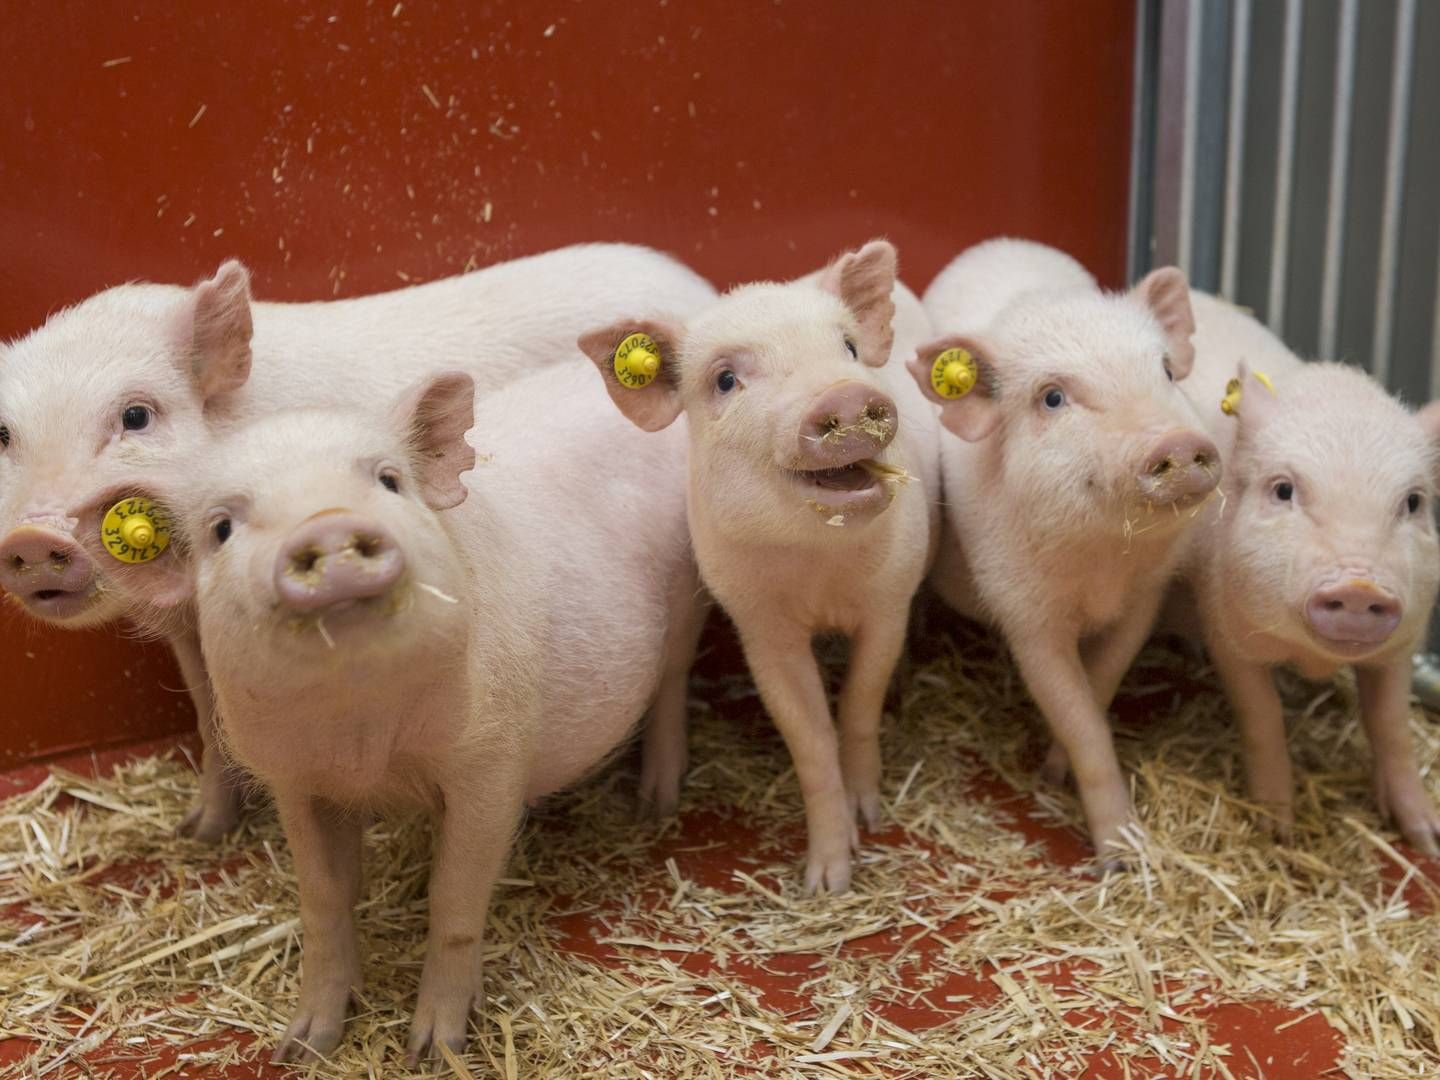 The swine breed Göttingen Minipig is one-eighth the size of a regular pig, making them easier to handle for preclinical studies | Photo: Ellegaard Göttingen Minipigs /PR